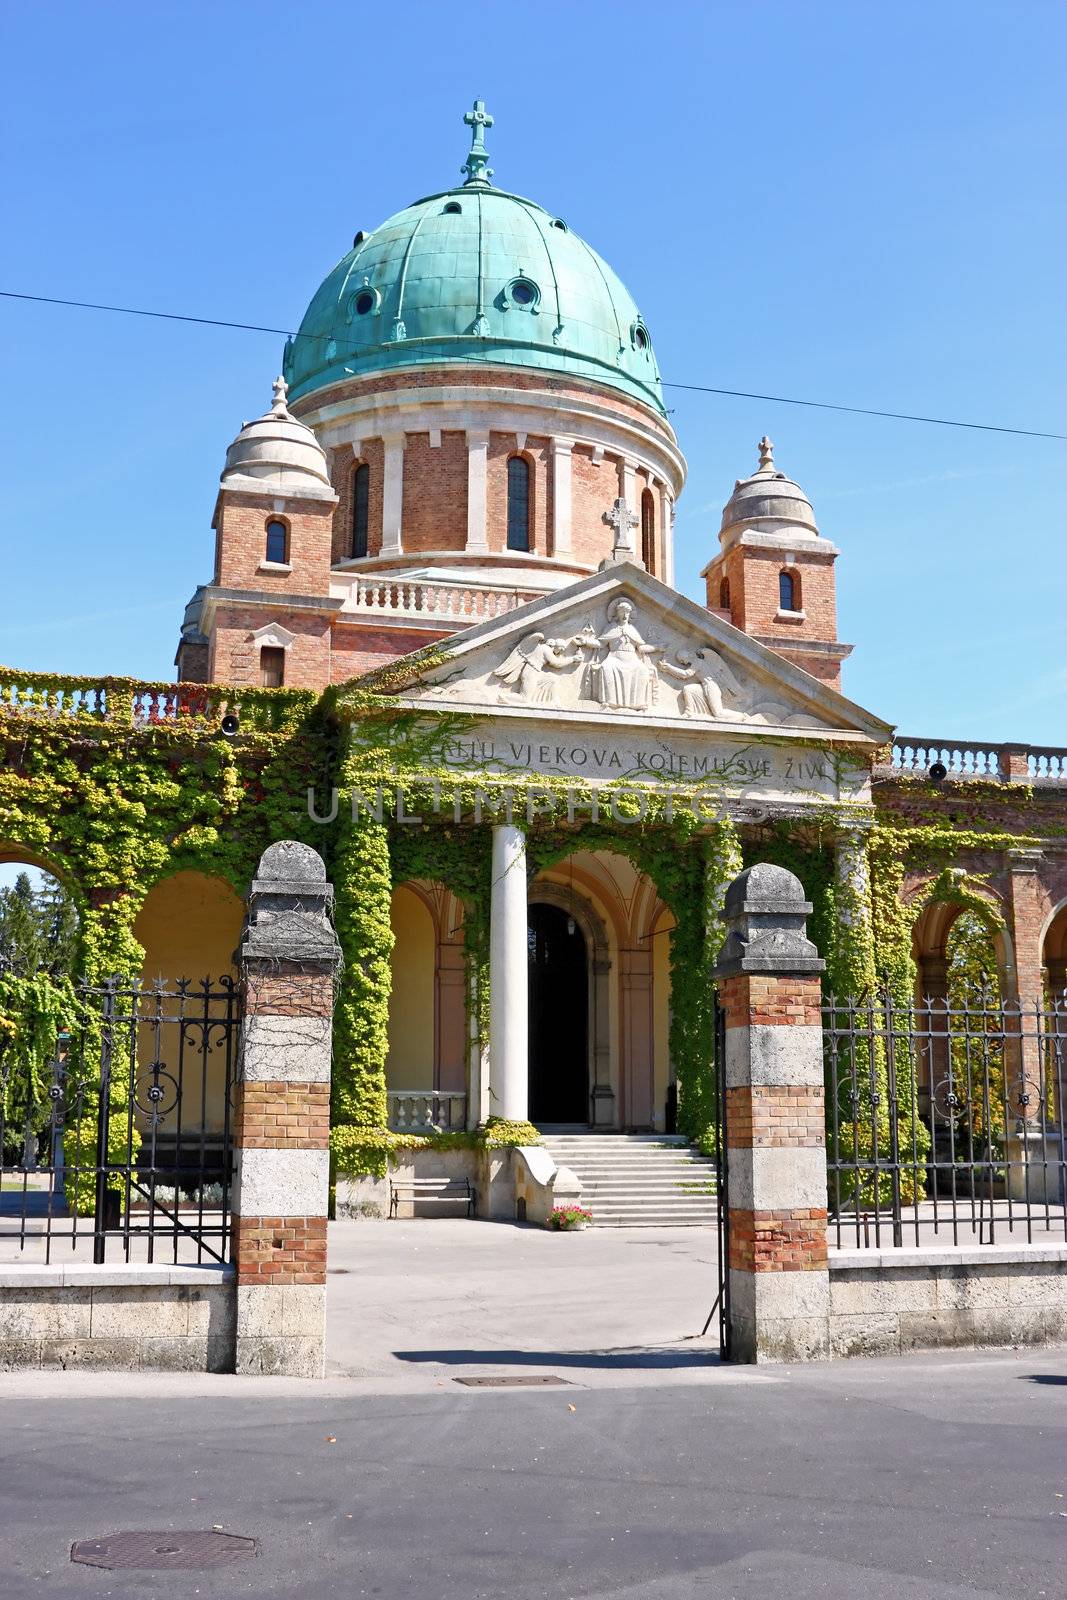 The main entrance to Mirogoj cemetery and Church of Christ the King, Zagreb, Croatia